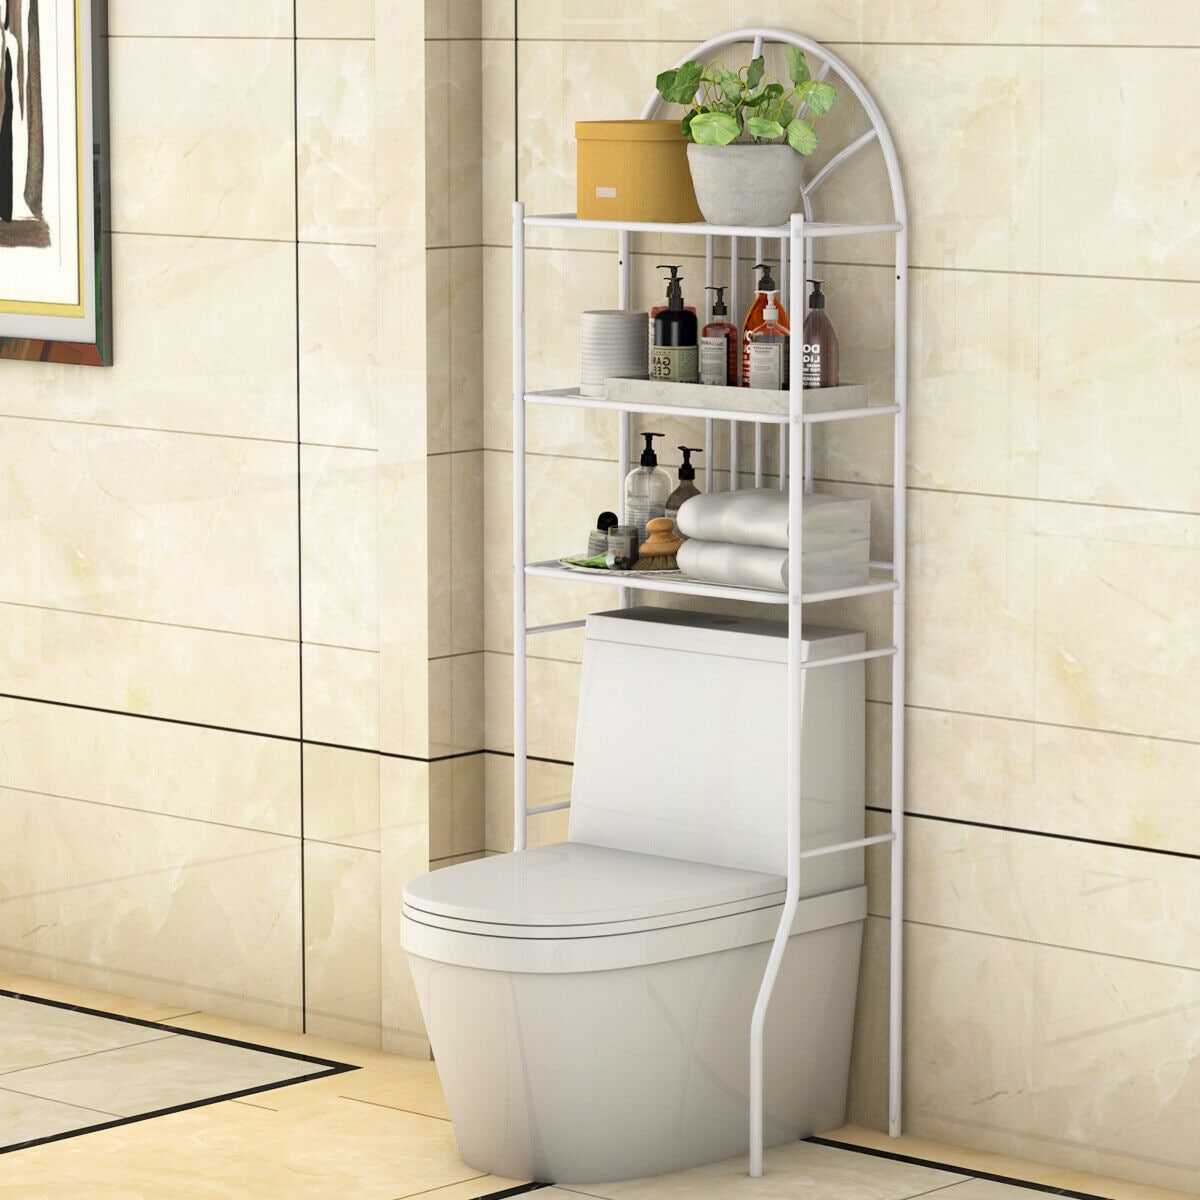 https://ak1.ostkcdn.com/images/products/is/images/direct/368f44cd856d89cec4aeae1995d747b2da3fdabc/Costway-3-Shelf-Over-The-Toilet-Bathroom-Space-Saver-Towel-Storage-Rack-Organizer-White.jpg